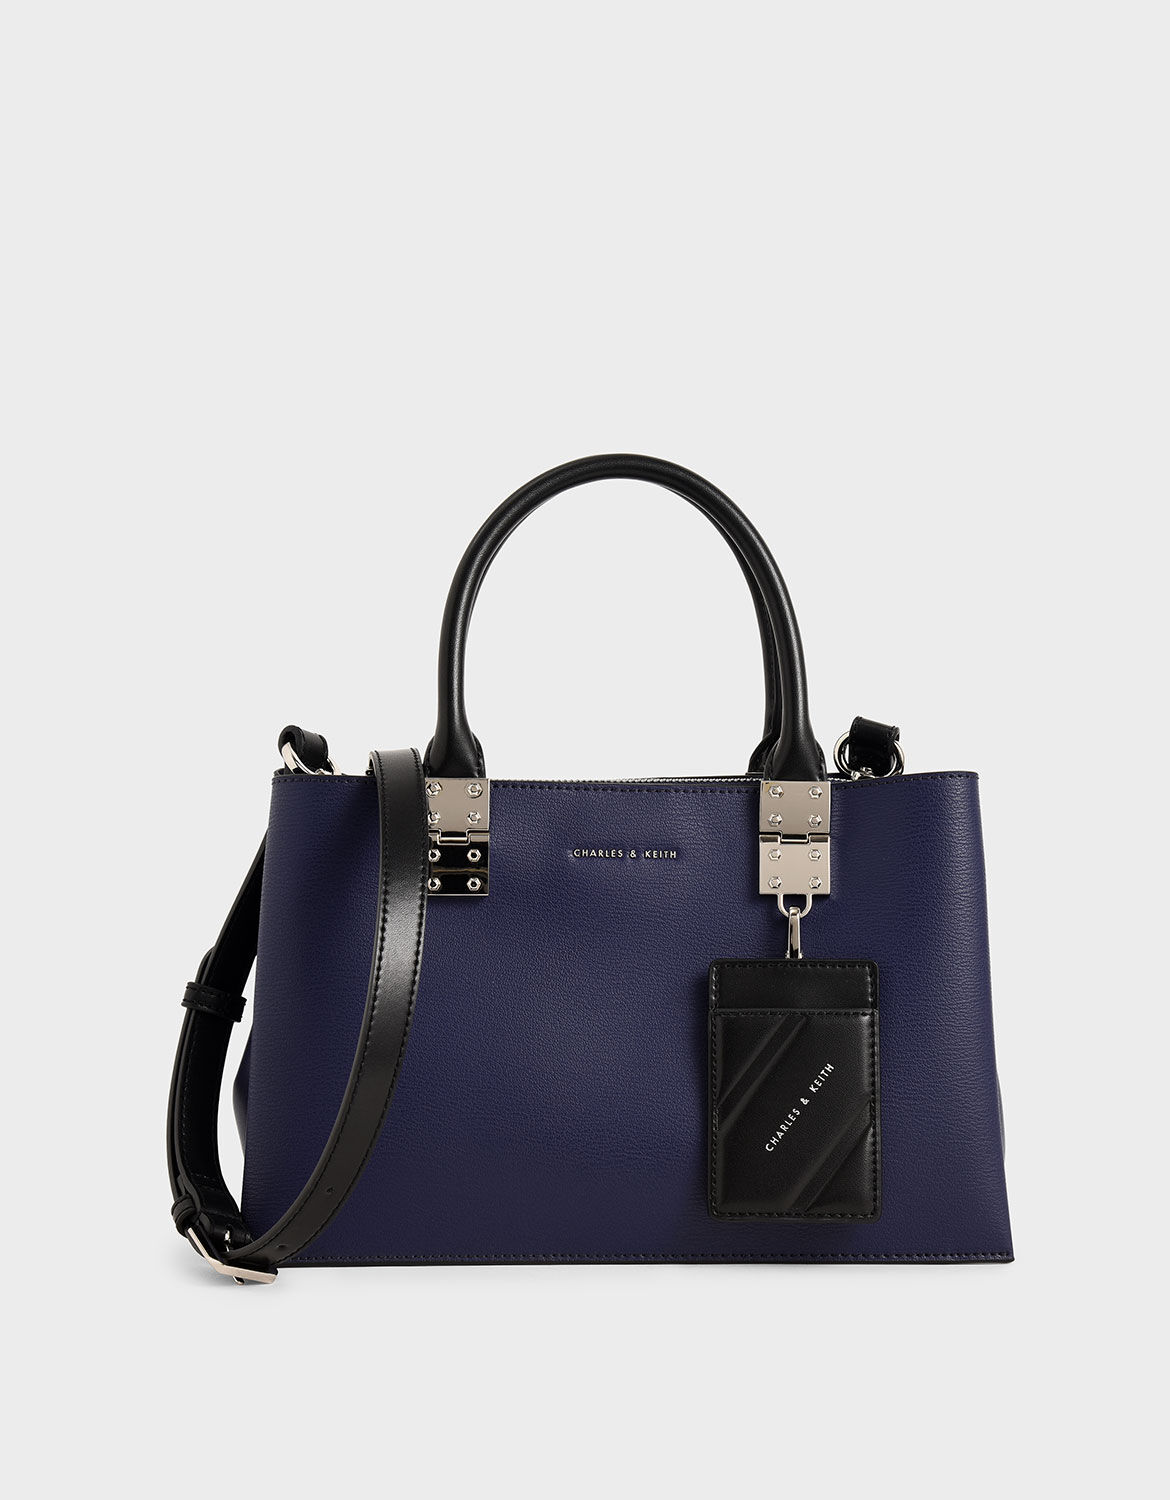 Double Top Handle Structured Bag - Dark Blue